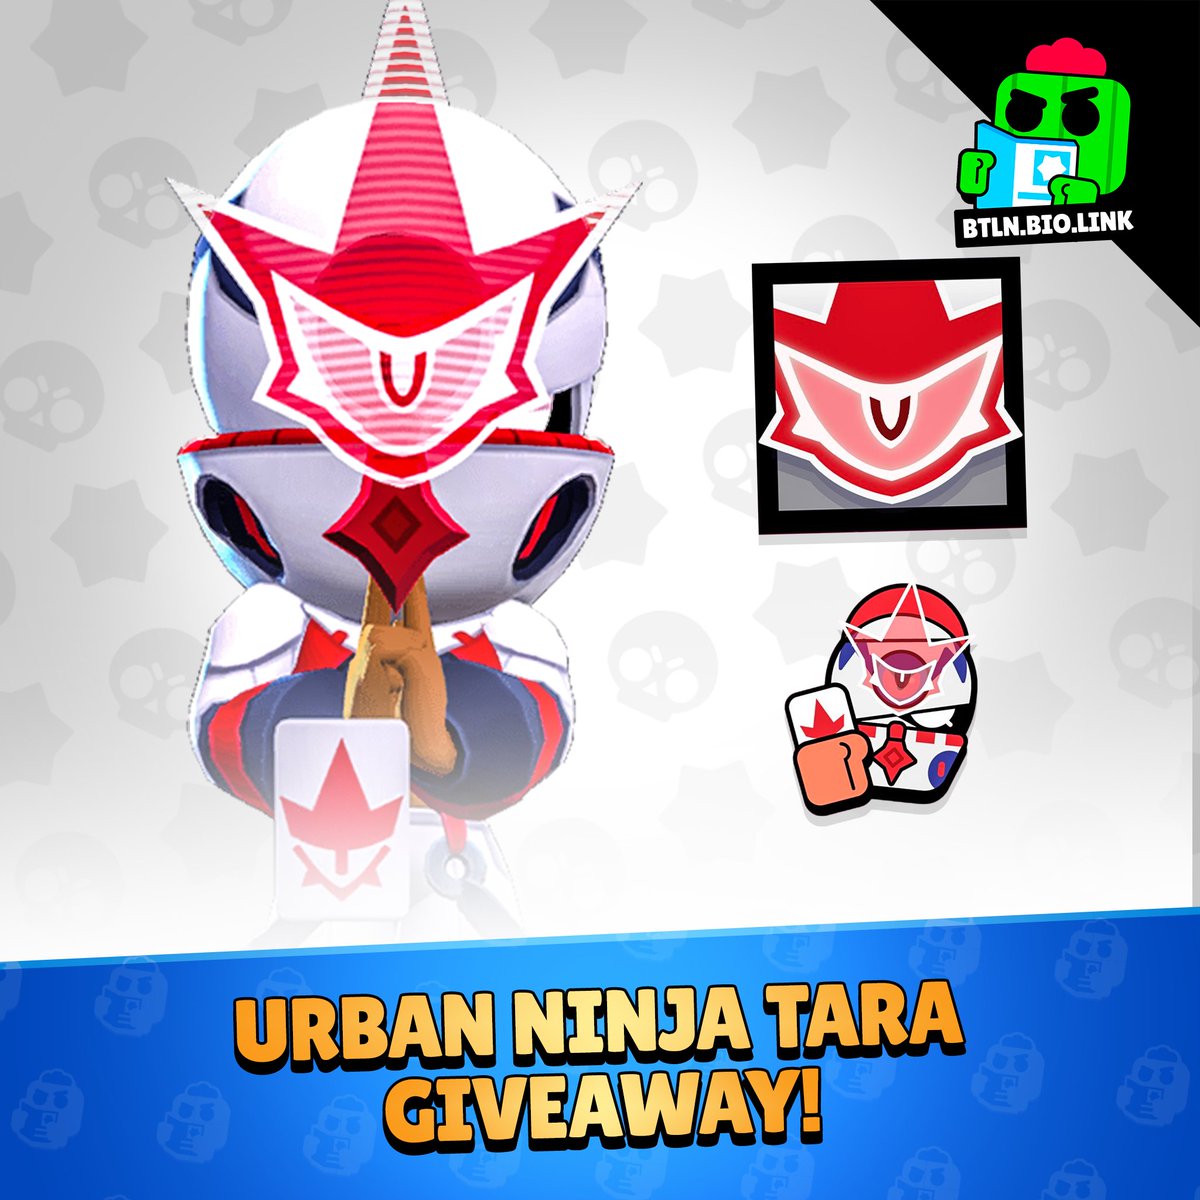 🥷 1x Urban Ninja Tara Giveaway!

📌 Requirements:
- Follow @BrawlStarsBTLN & @BScomunidad__ 
- ❤️ + ♻️
- Comment down below your favorite skin of this update!

⏲️ Ends in 5 days!

#BrawlStars #Mutations #UrbanNinjaTaraGiveaway